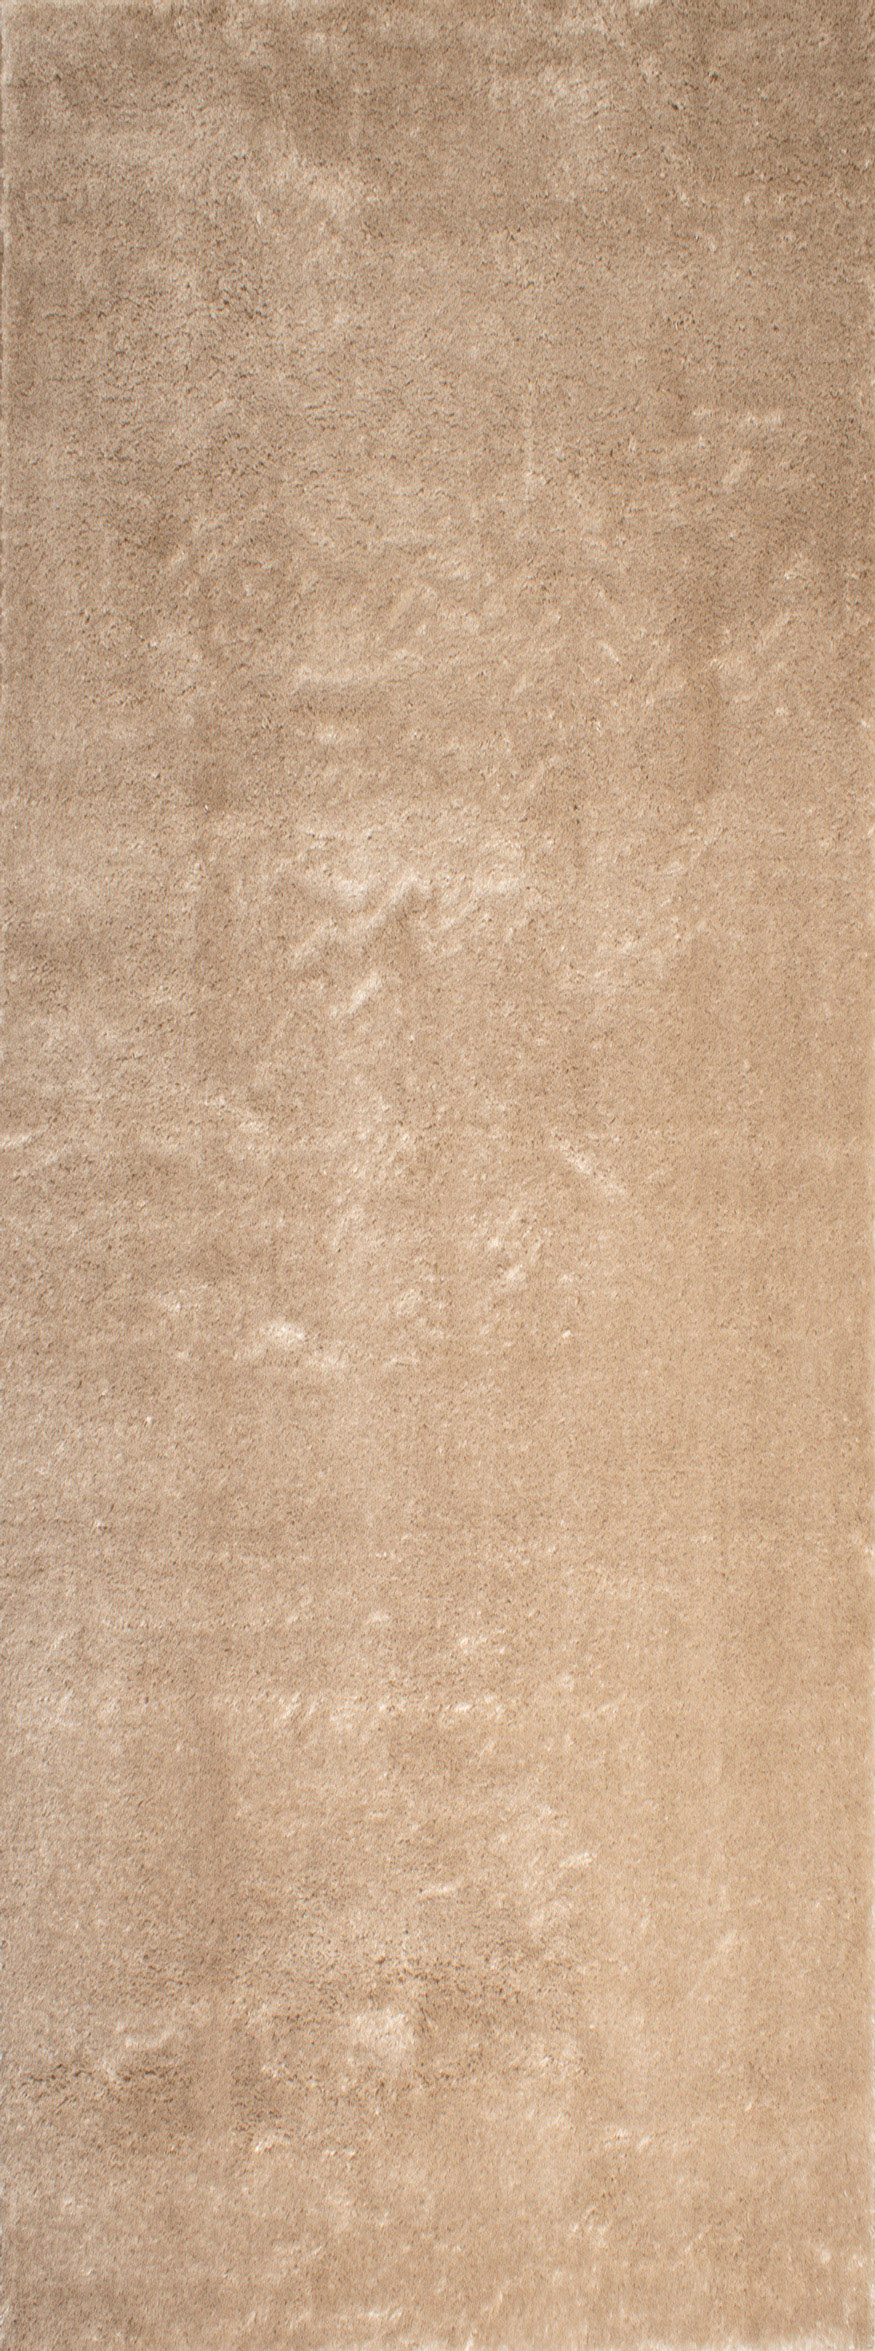 Tapis en polyester brillant motif uni beige 80x150